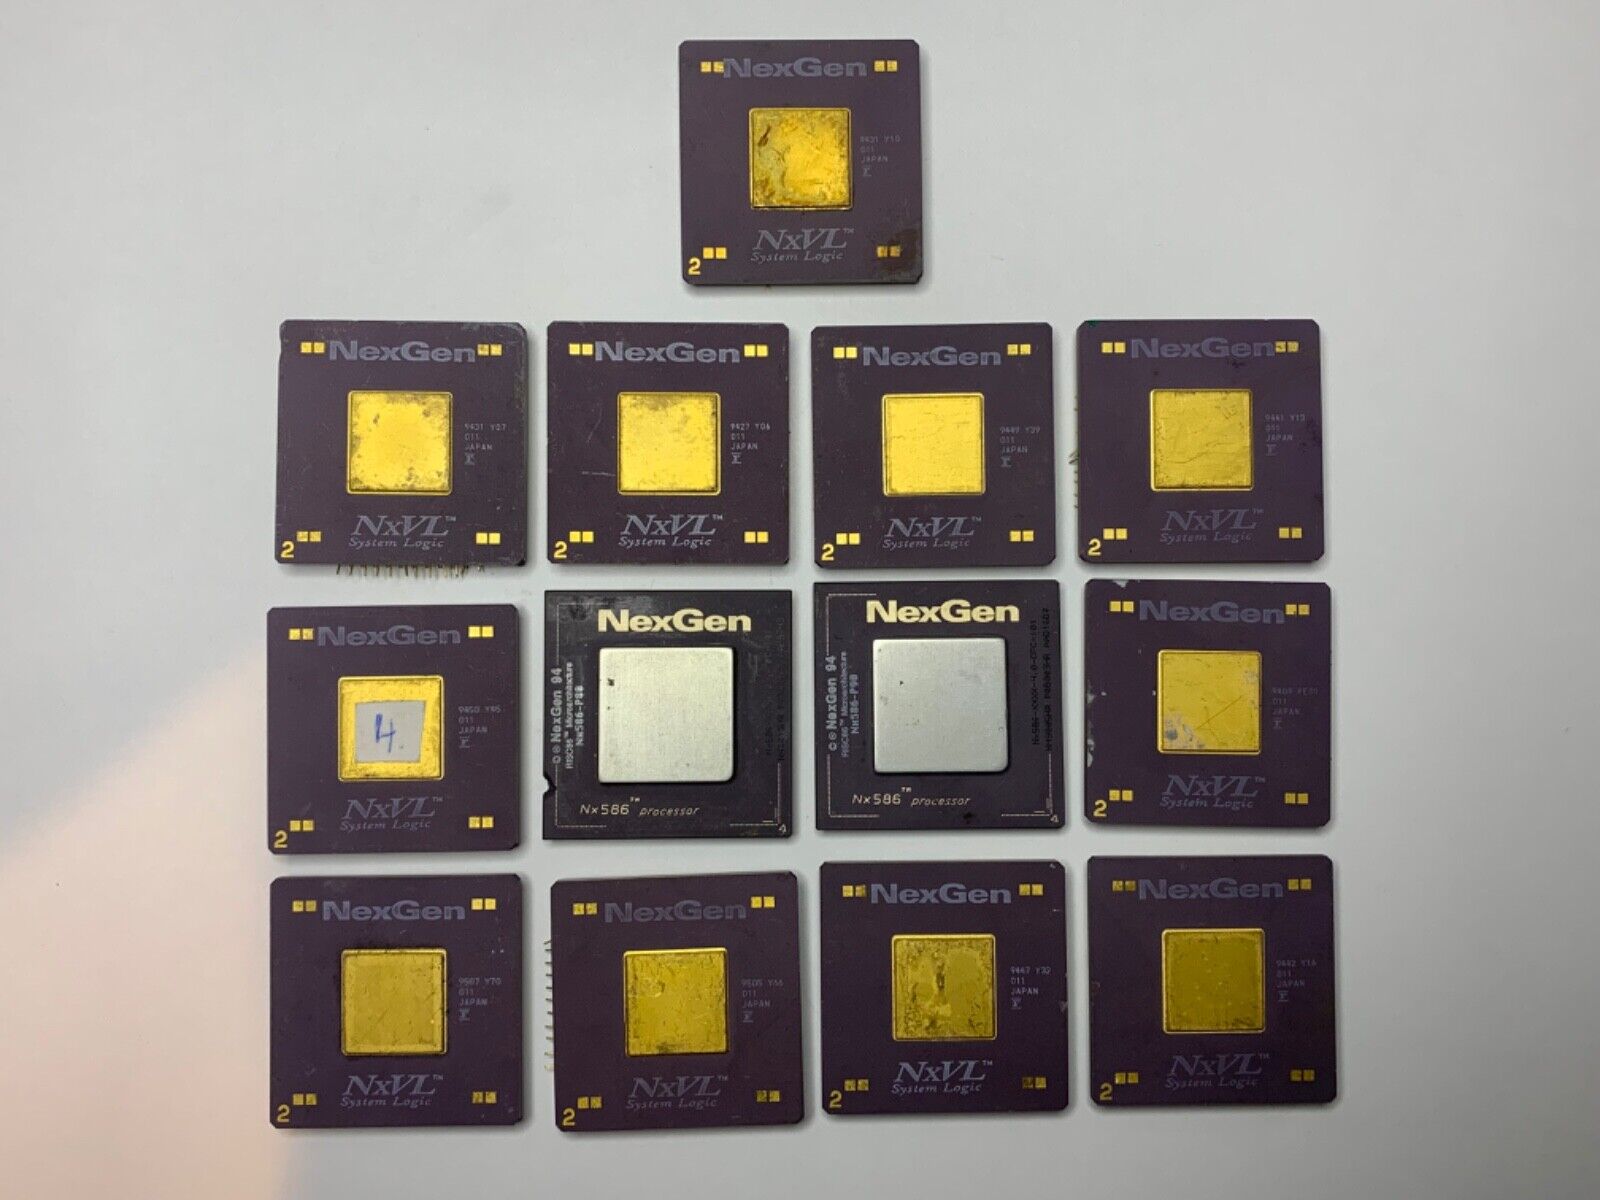 Lot of Vintage IBM NexGen Nx586 RISC86 MicroArchitecture CPU/Processor Gold Pins